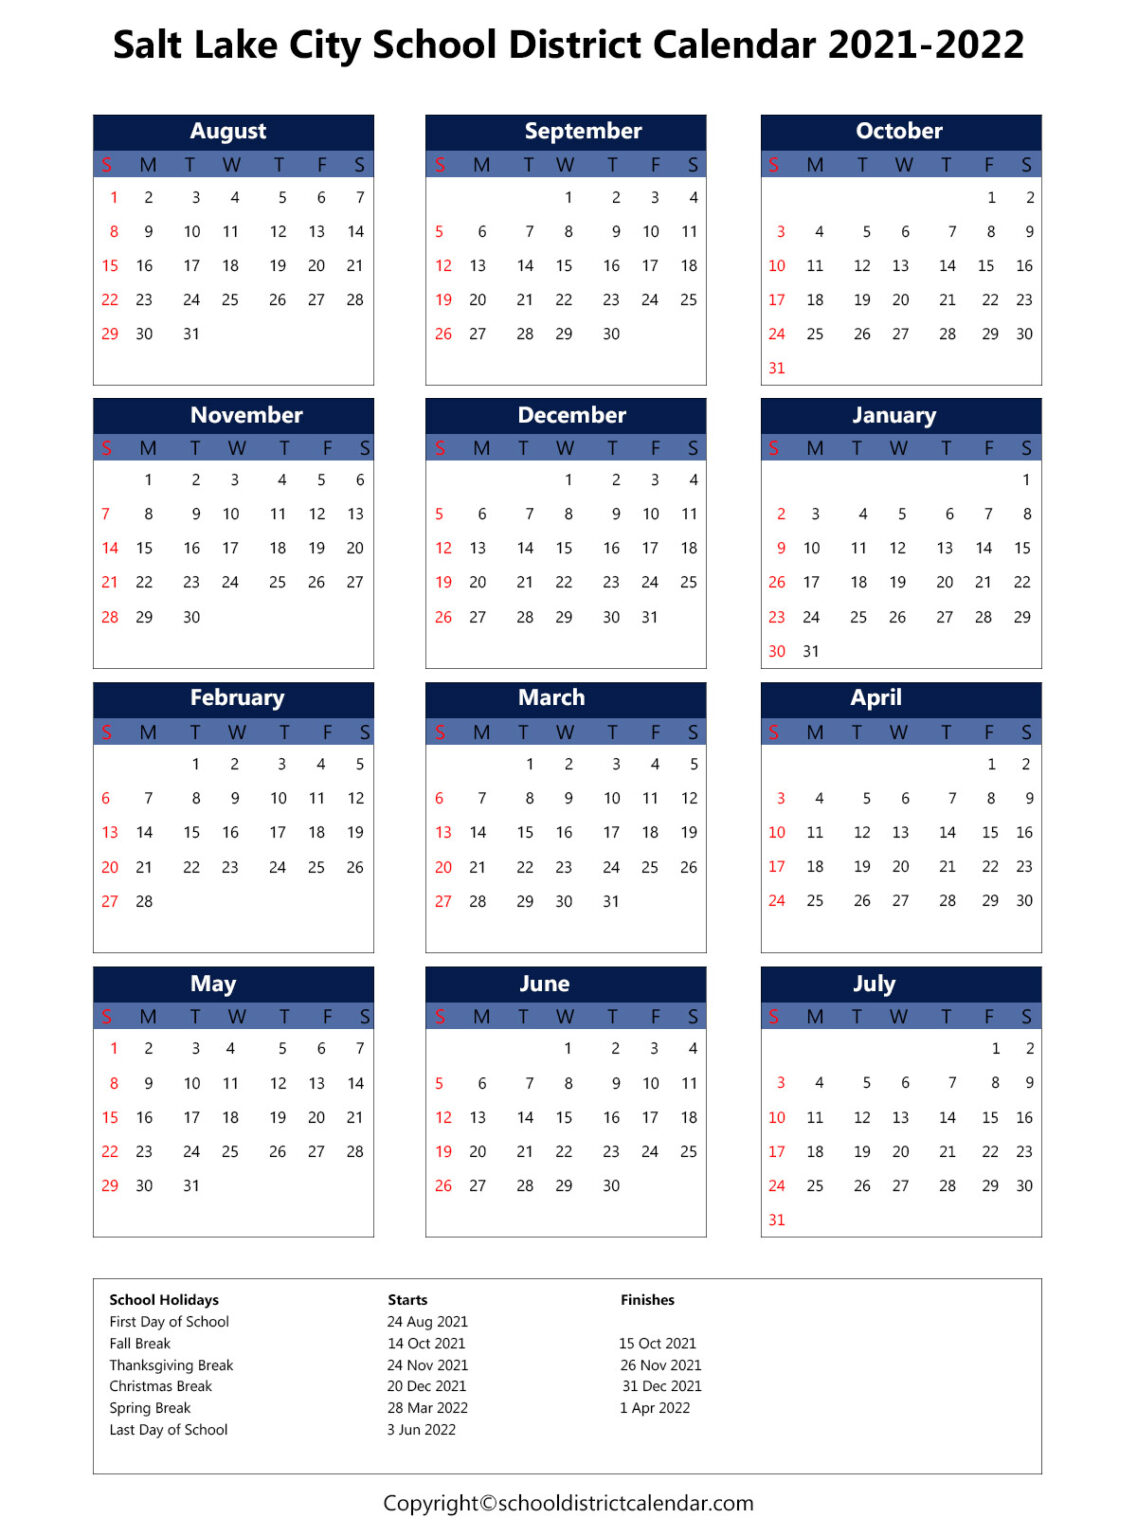 Salt Lake City School District Calendar Holidays 20212022